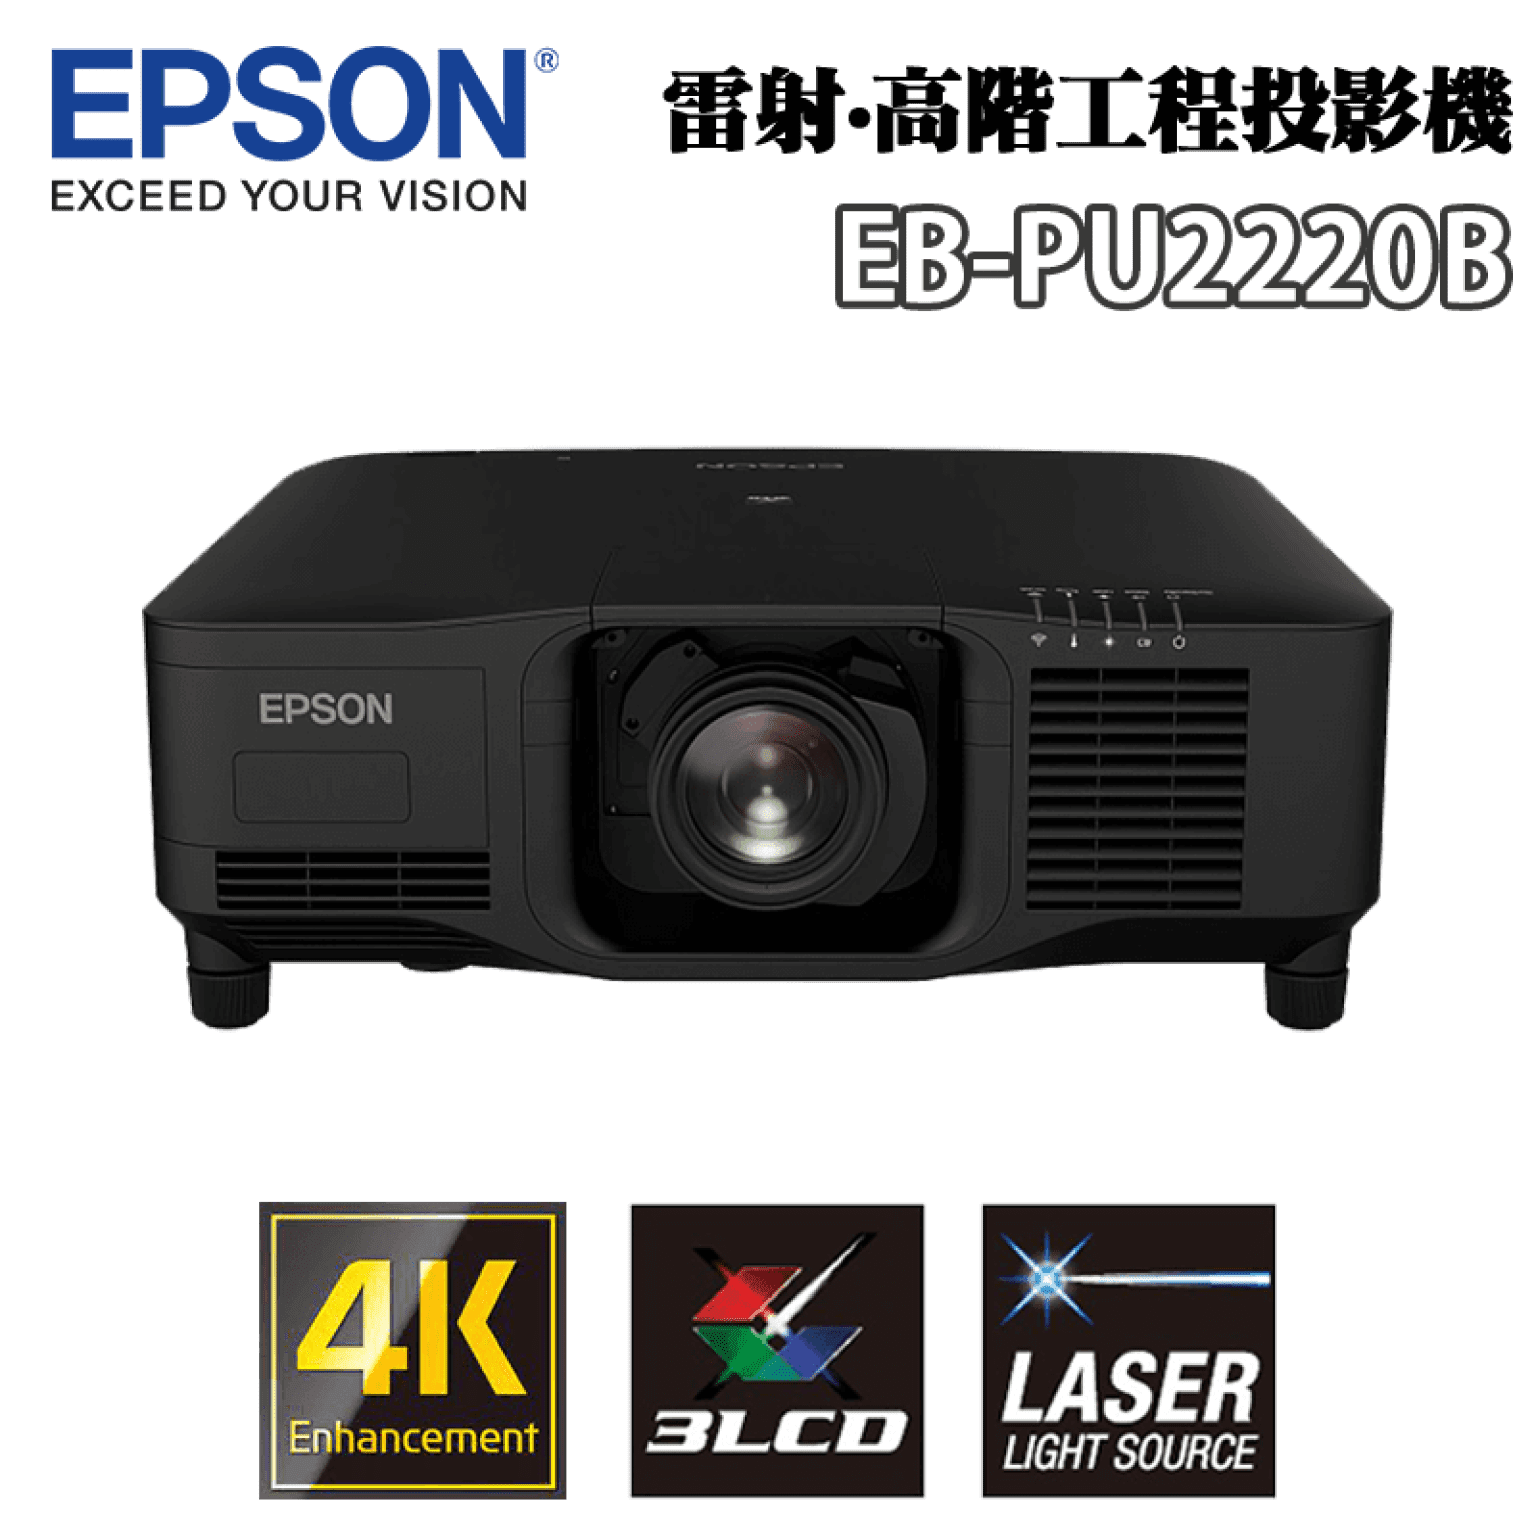 EPSON-EB-PU2220B-Main-1536x1536.png